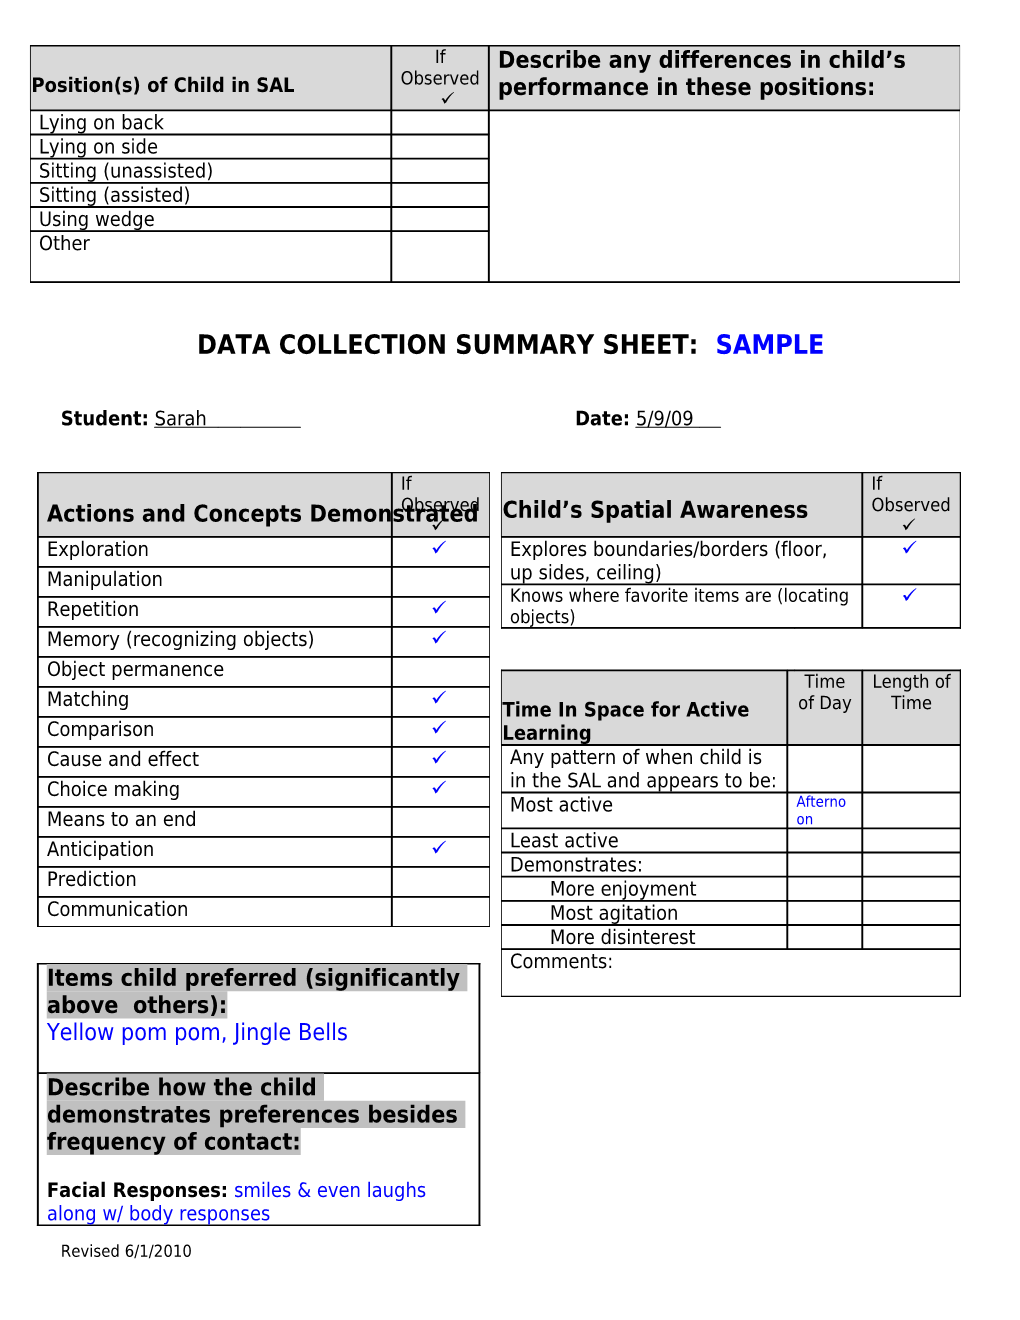 Data Collection Summary Sheet